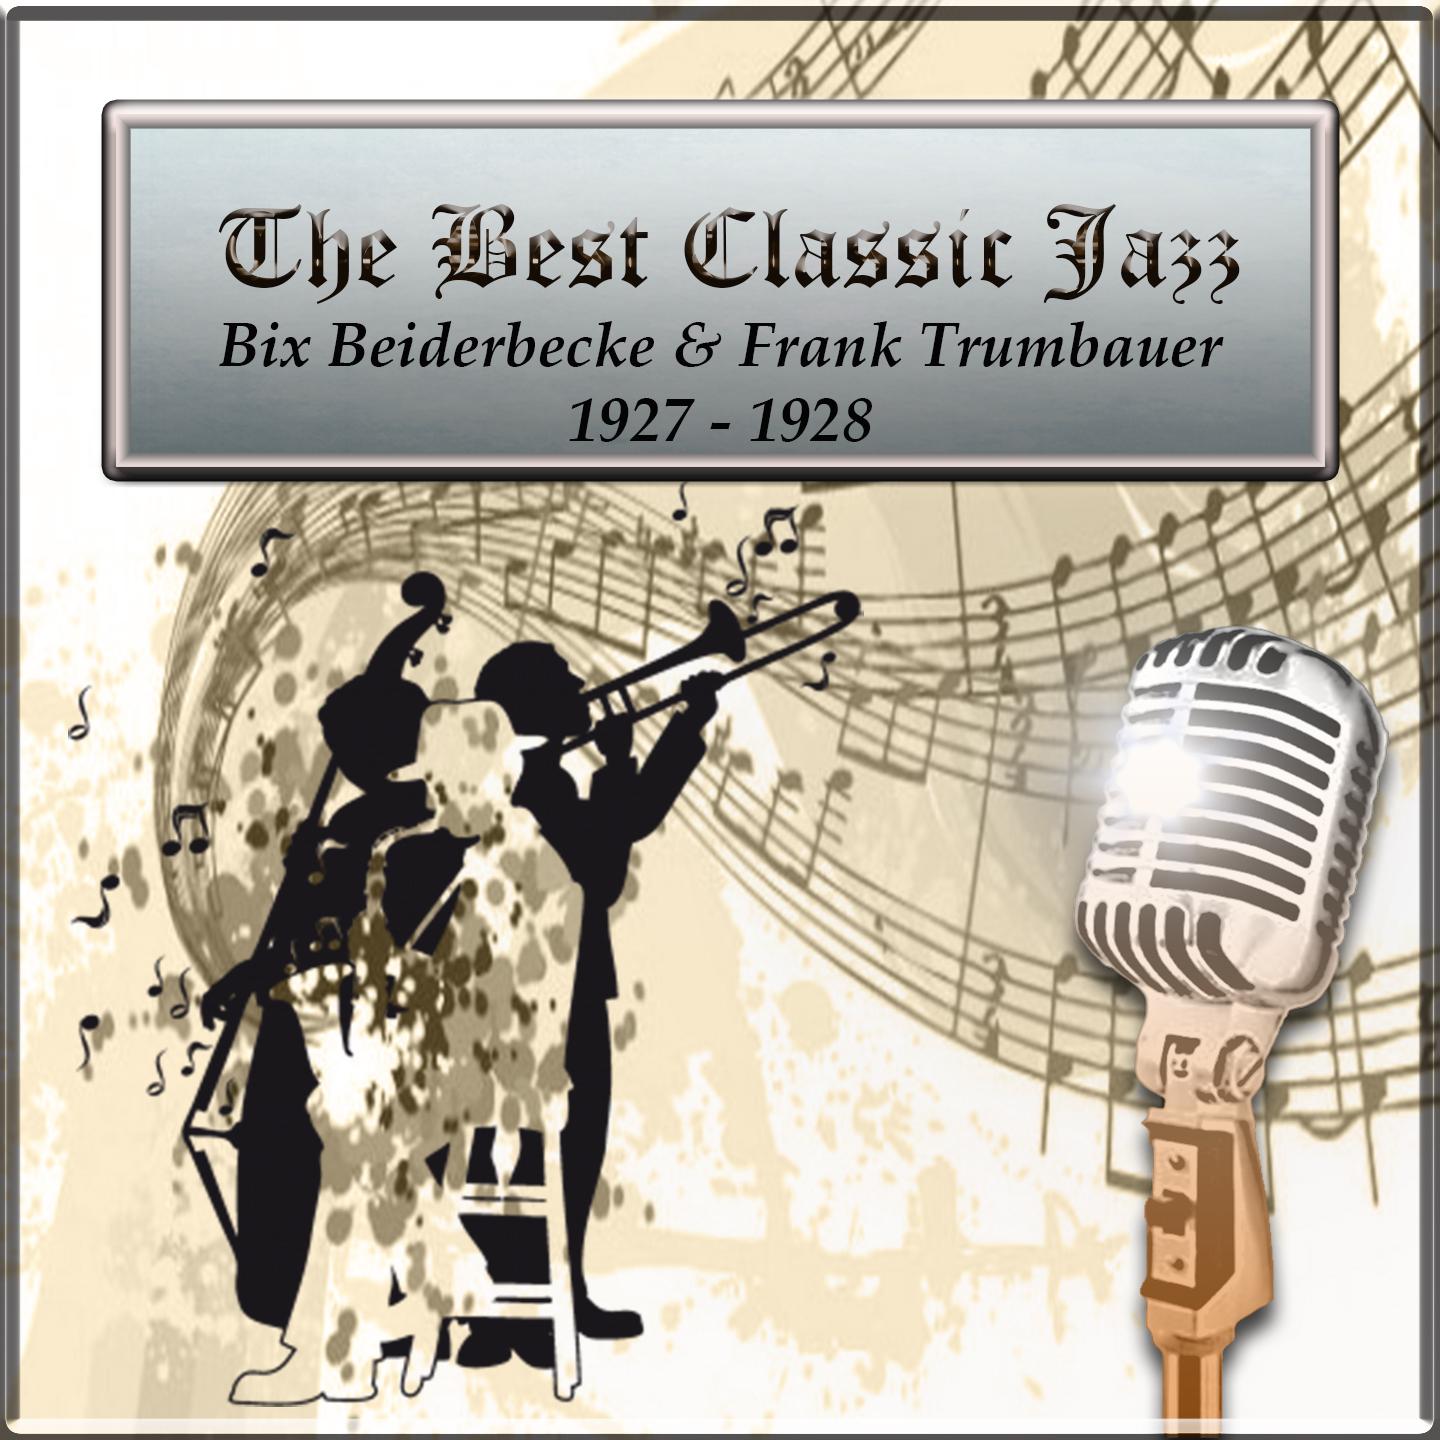 The Best Classic Jazz, Bix Beiderbecke & Frank Trumbauer 1927 - 1928